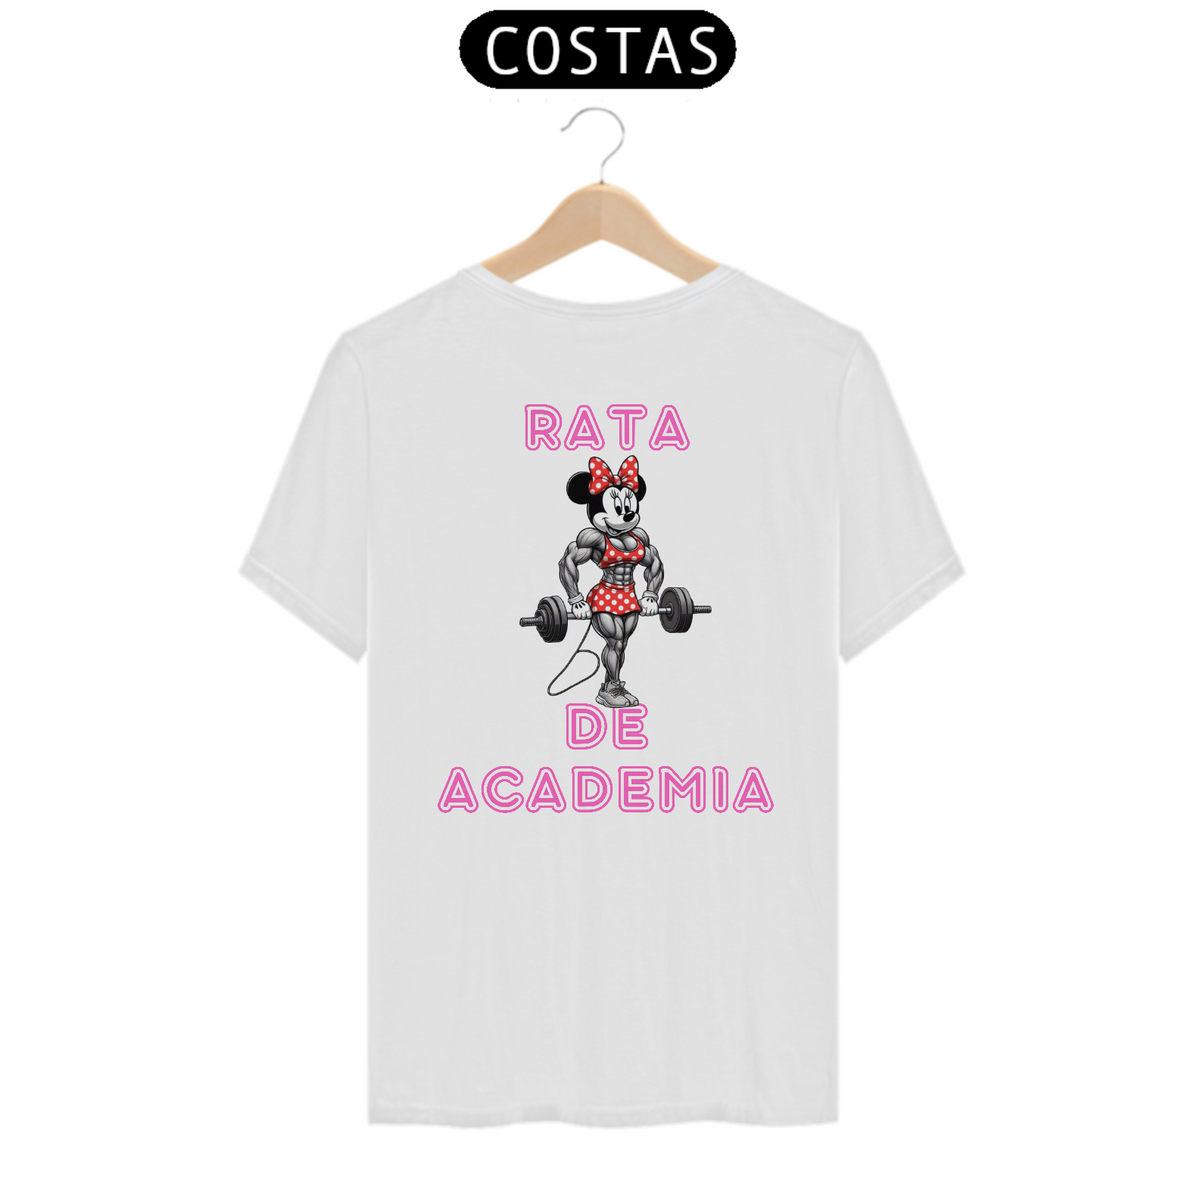 Nome do produto: Camiseta Rata de academia Classic